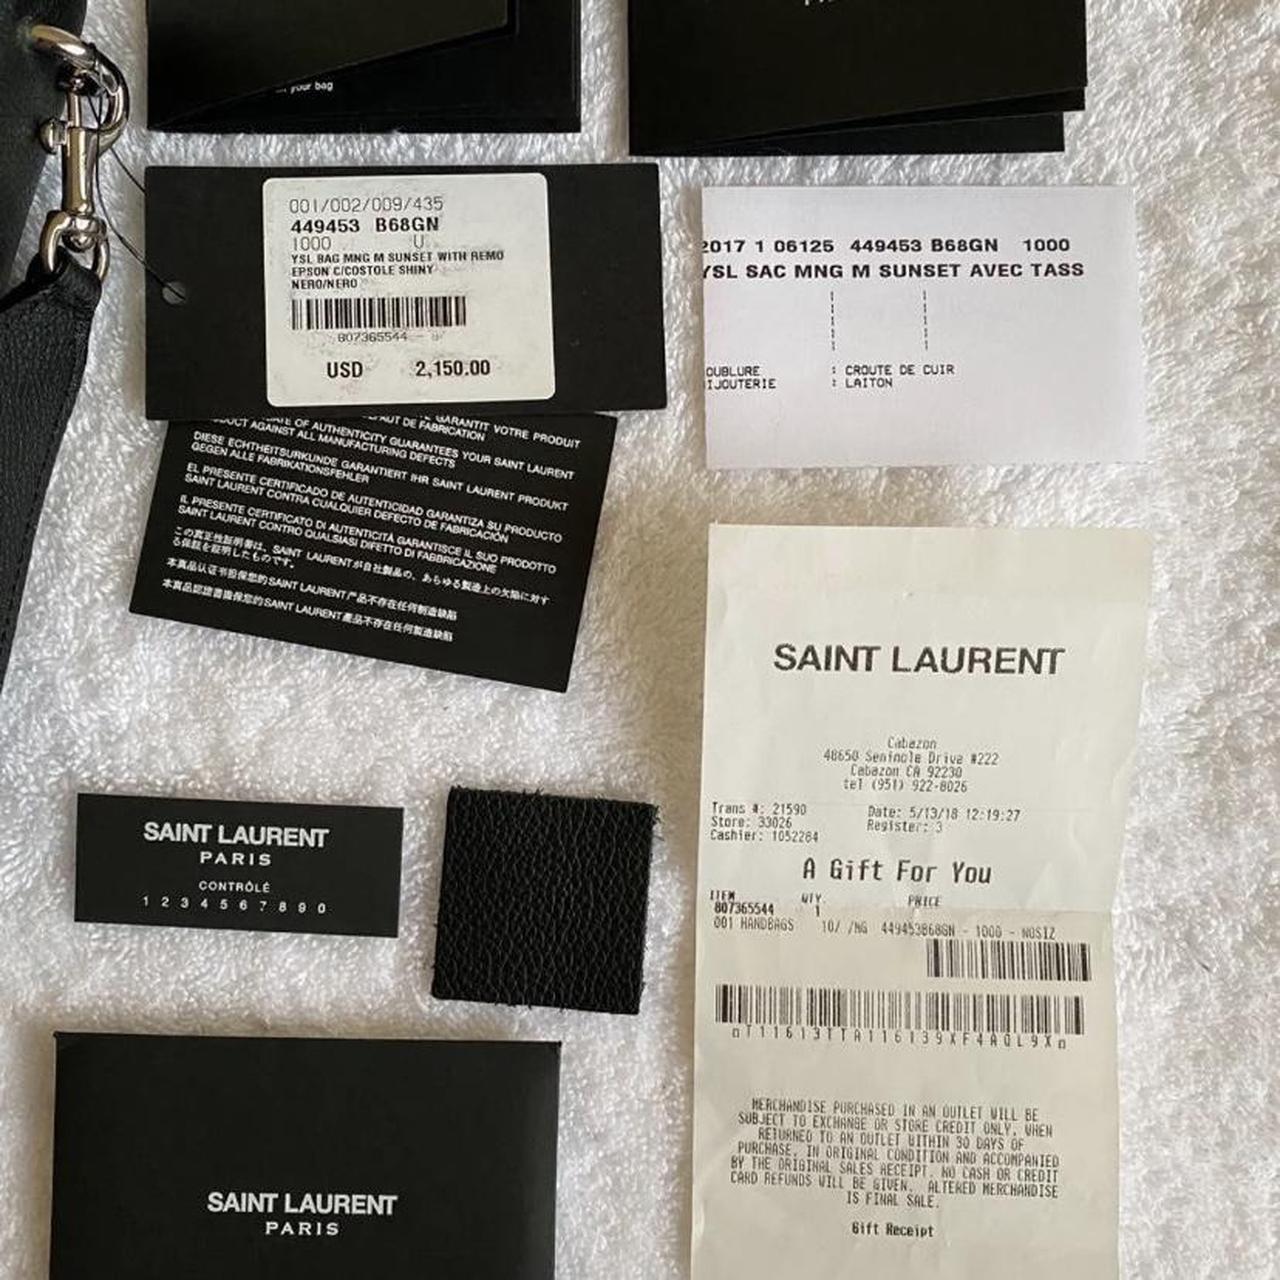 Yves Saint Laurent Handbags for sale in Nashville, Tennessee | Facebook  Marketplace | Facebook